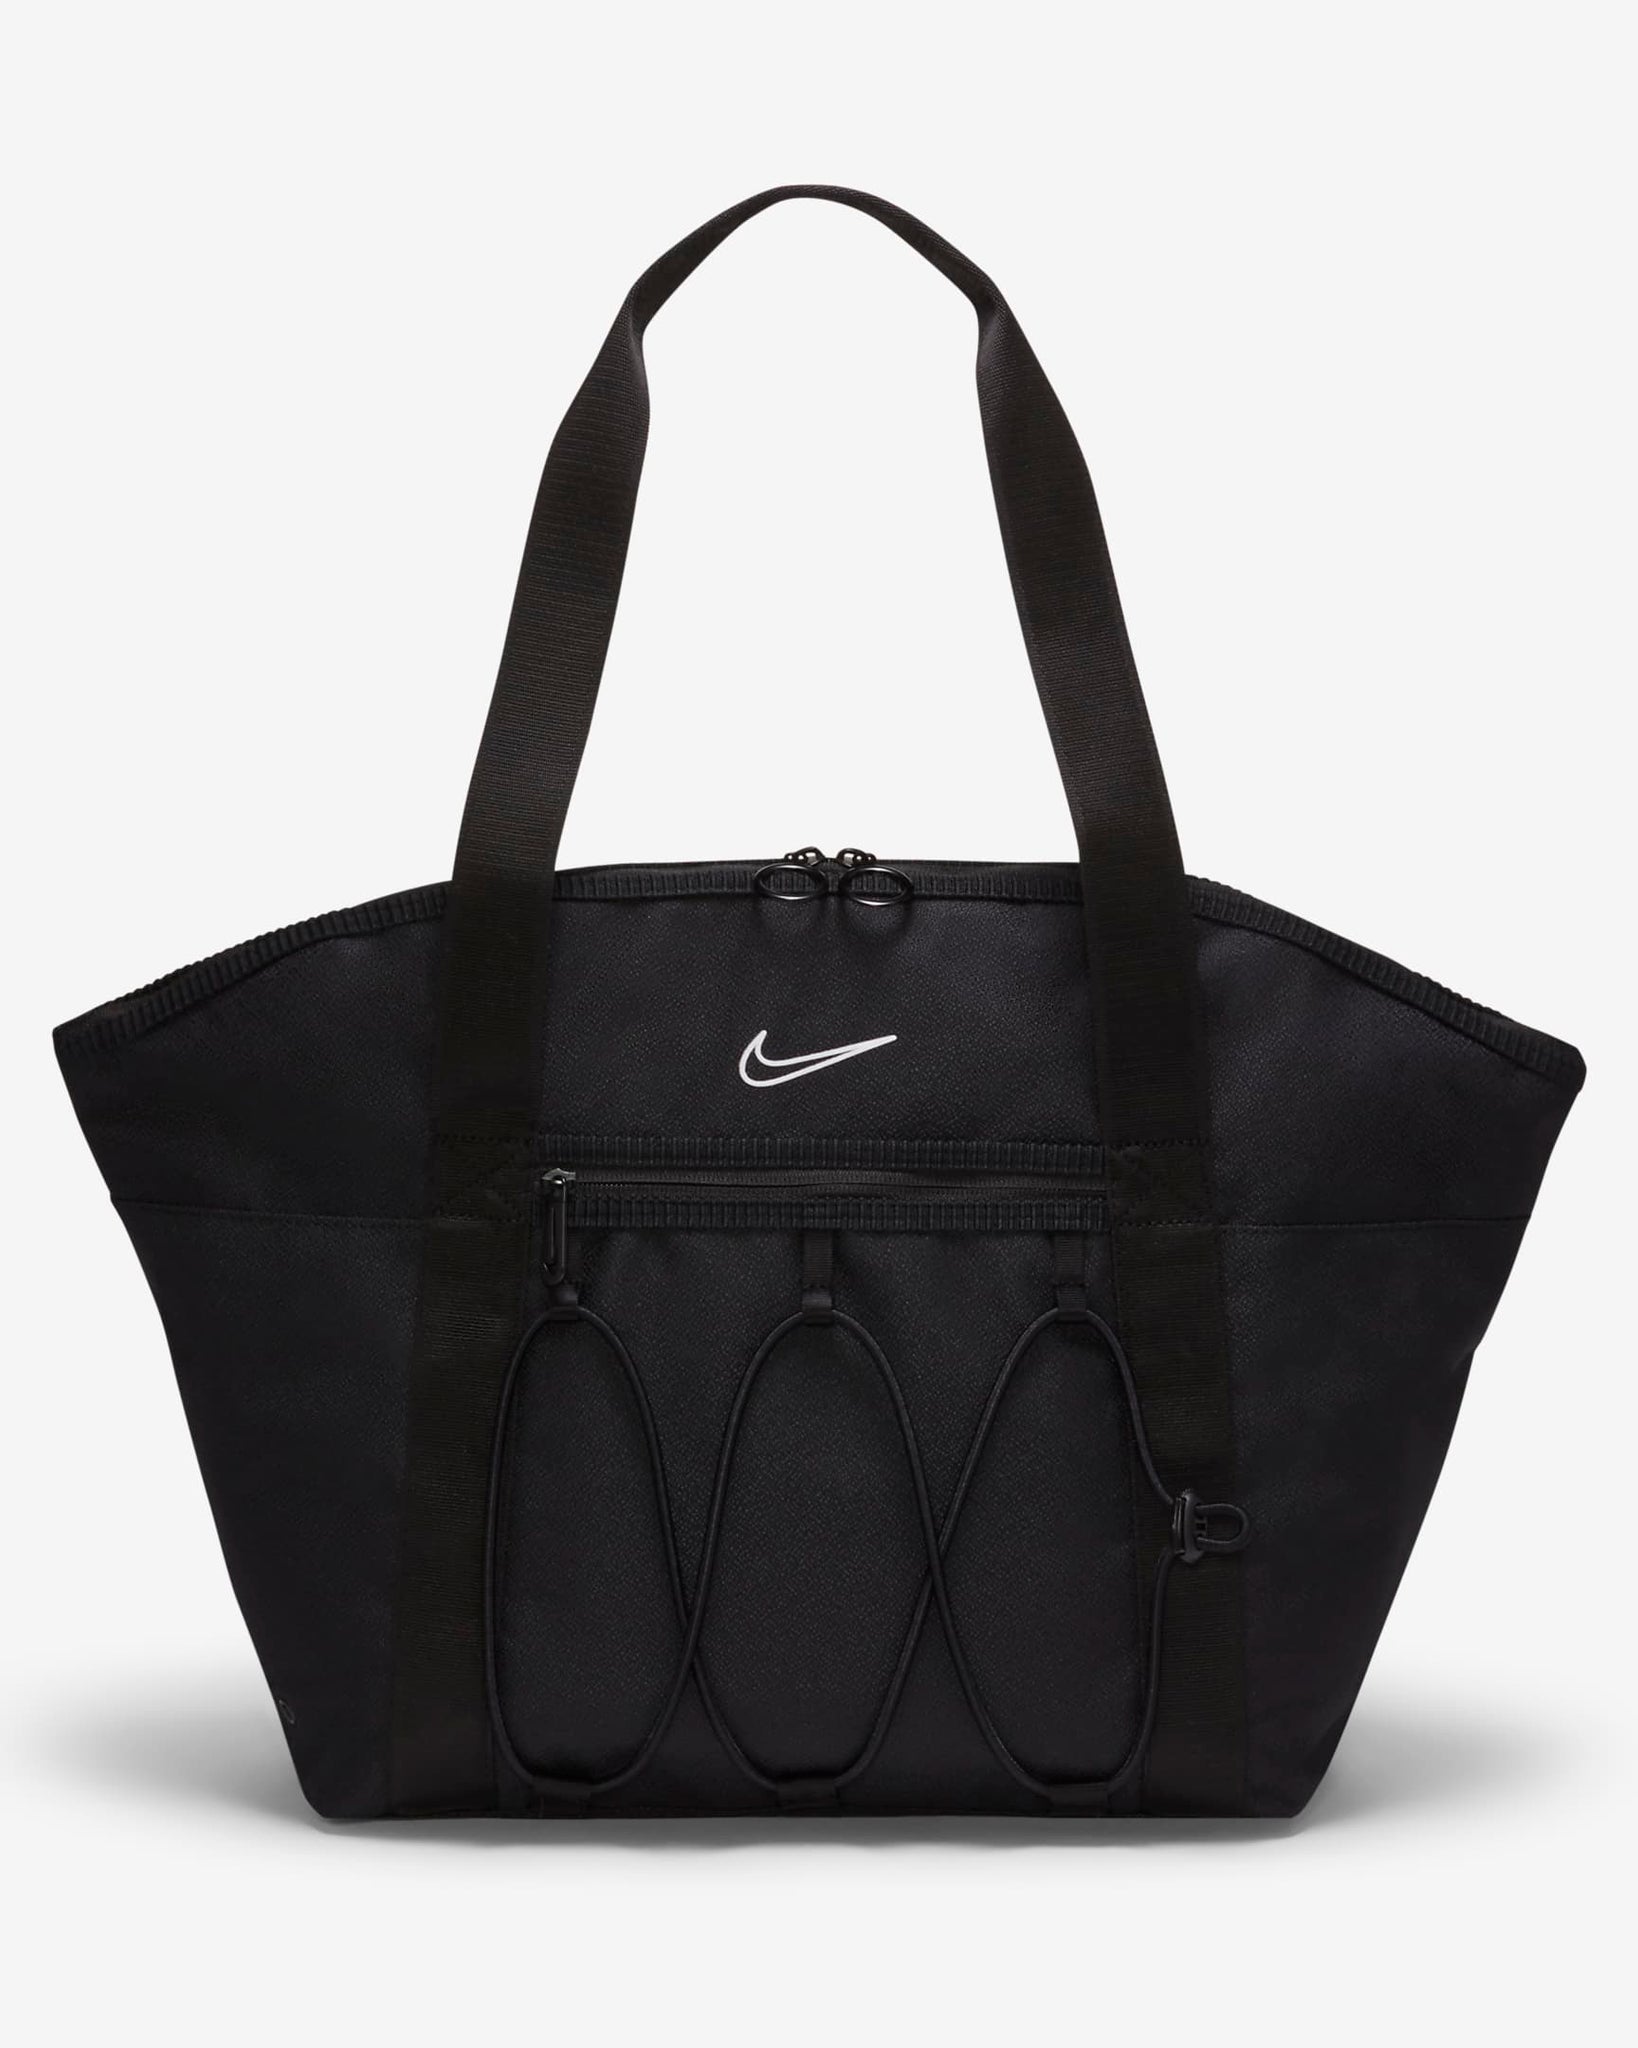 Nike One Training bag (18 liters)